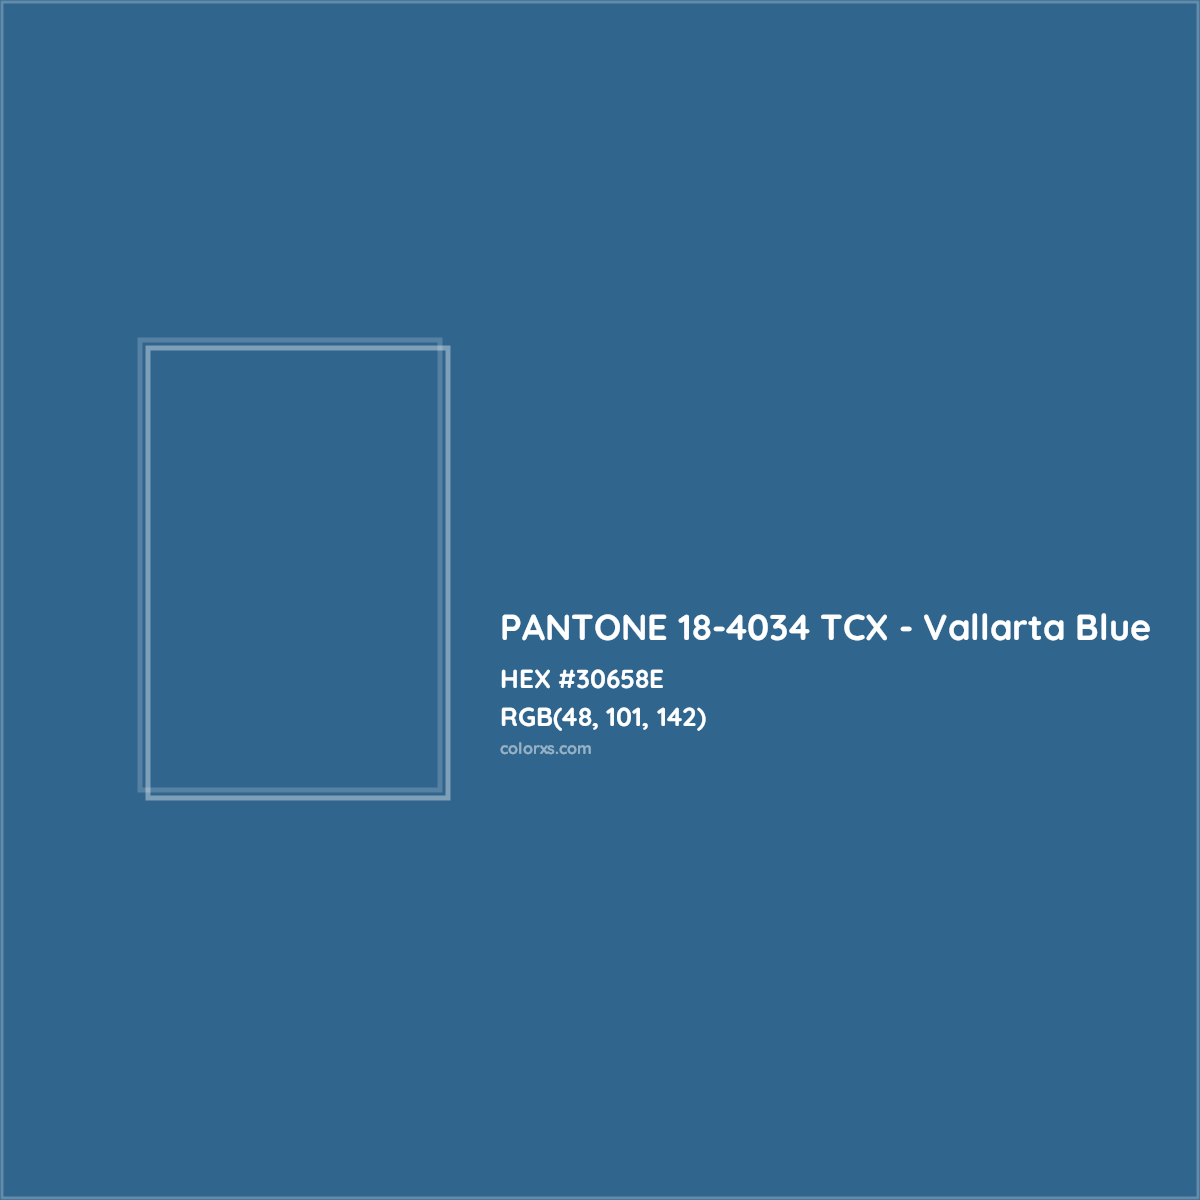 HEX #30658E PANTONE 18-4034 TCX - Vallarta Blue CMS Pantone TCX - Color Code